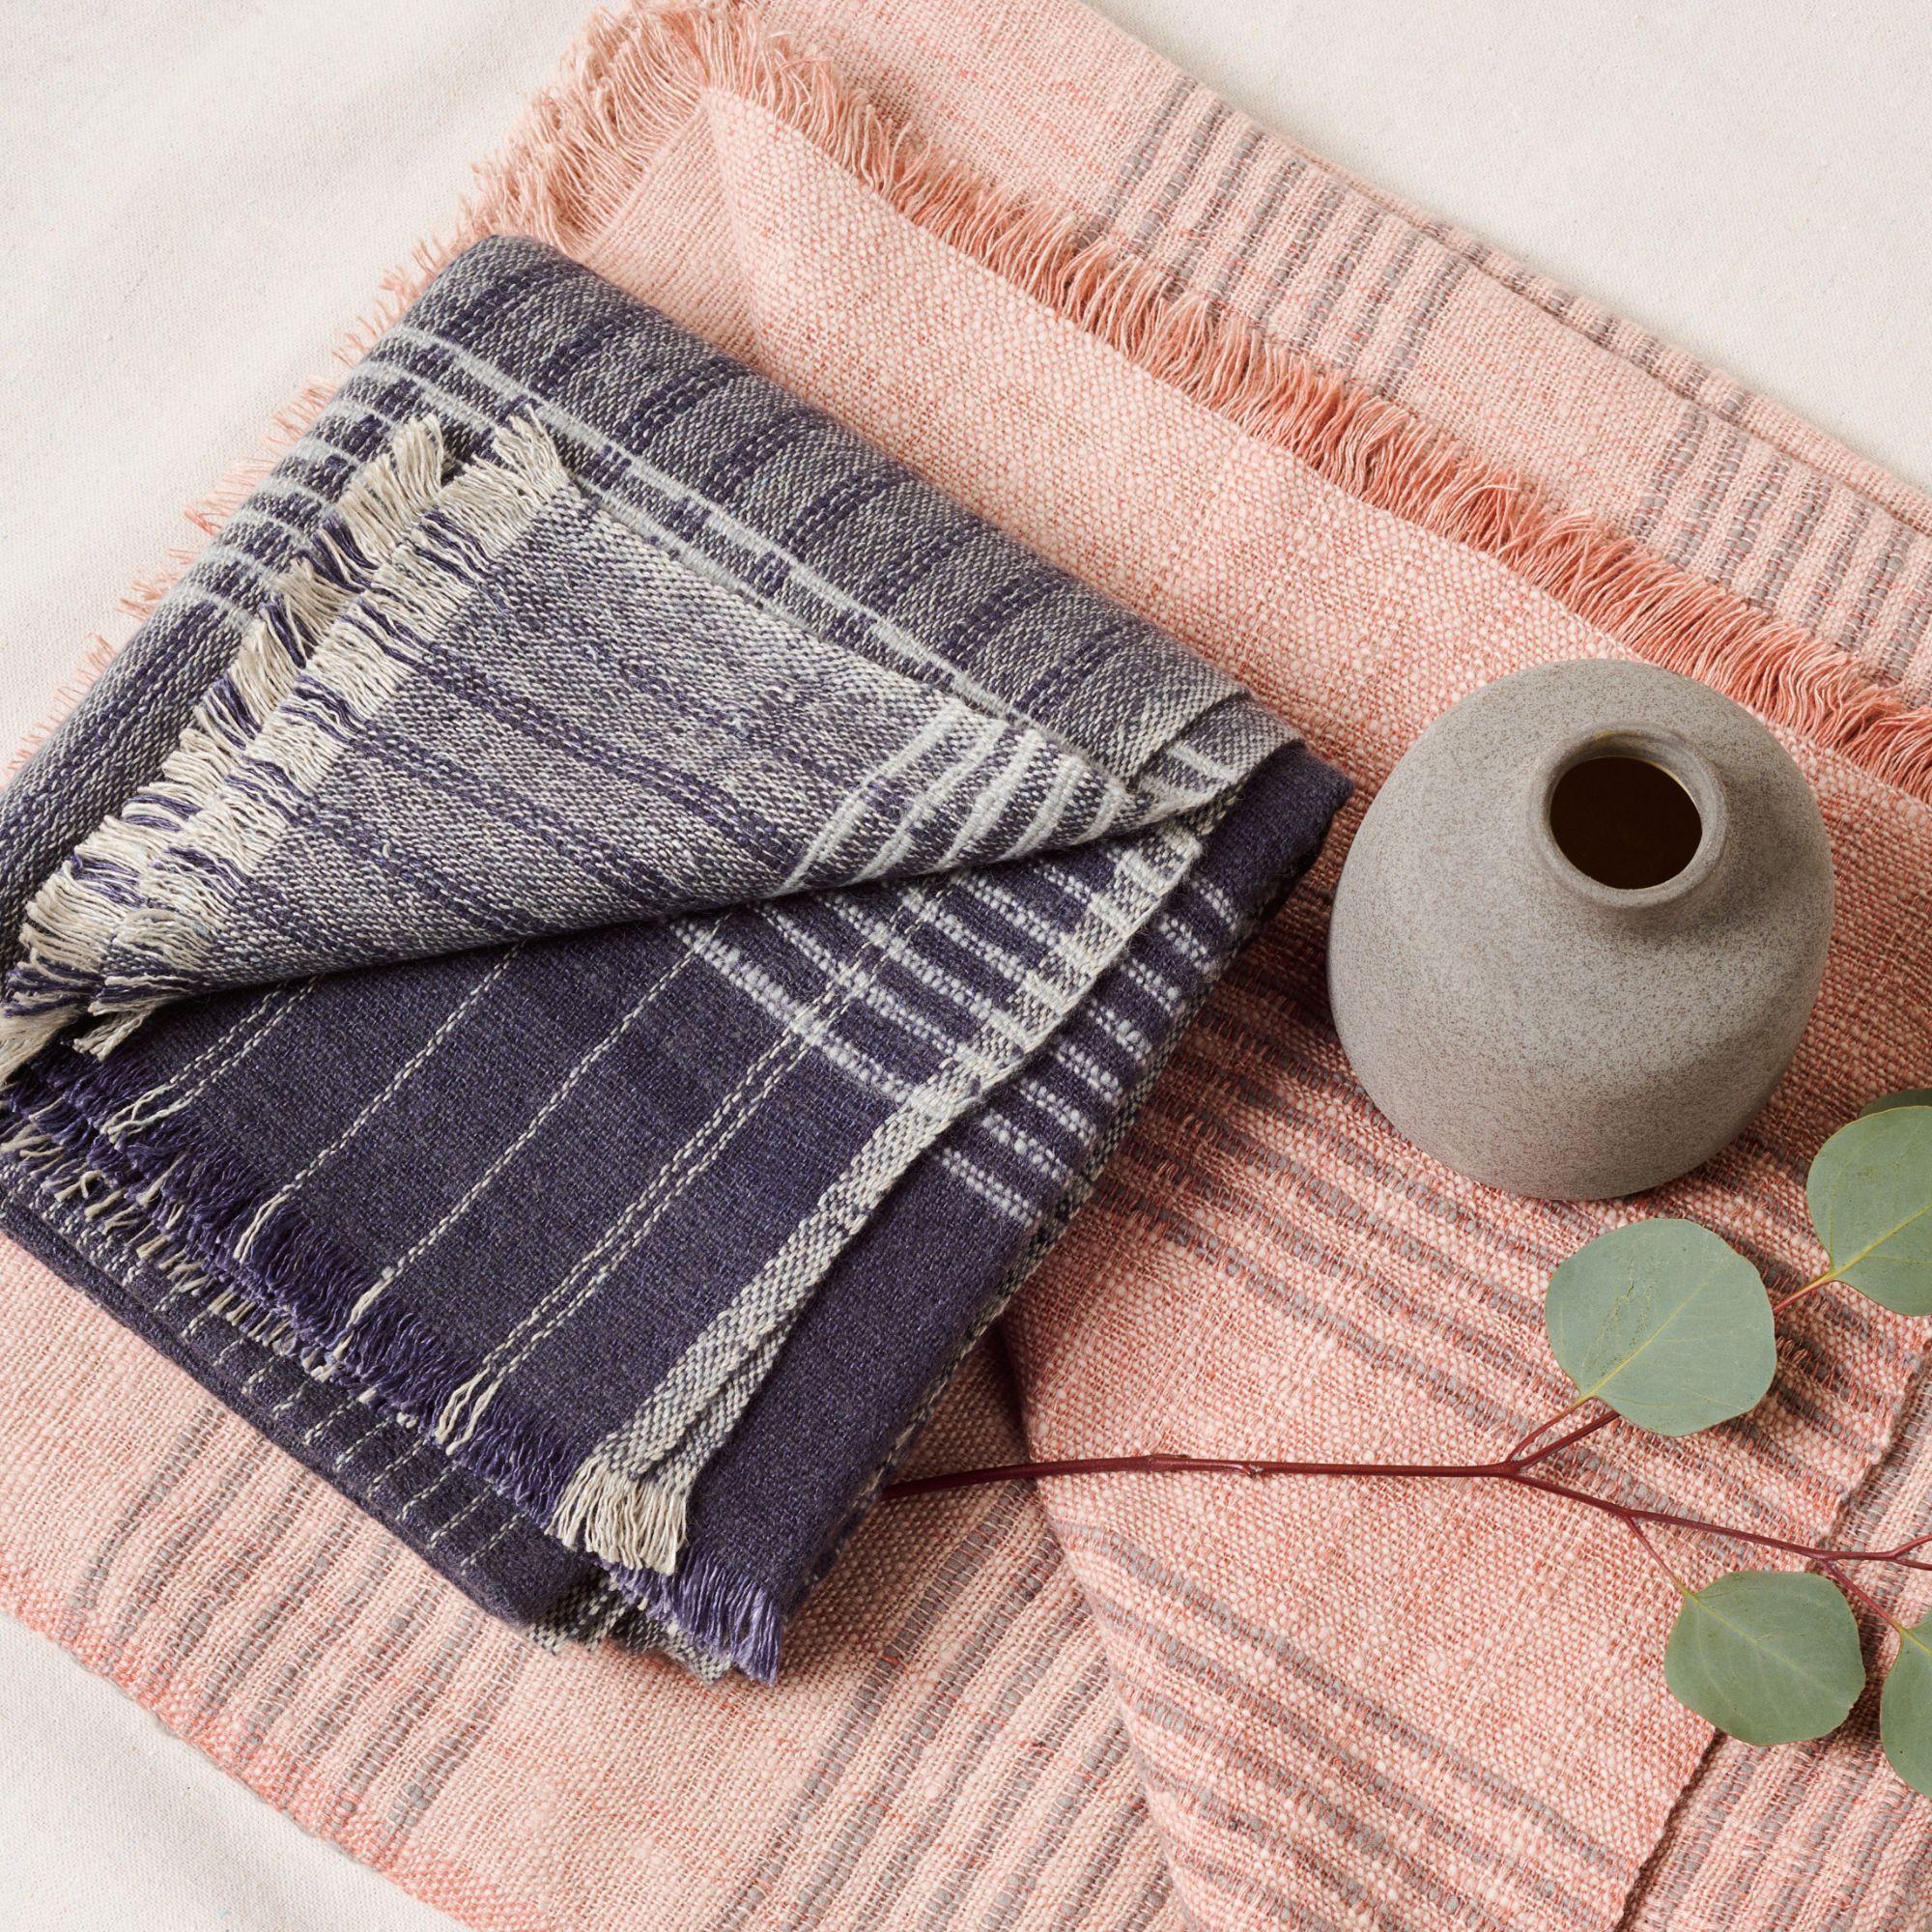 Modern Alloy Handloom Throw in Pure Merino Linen Blend For Sale